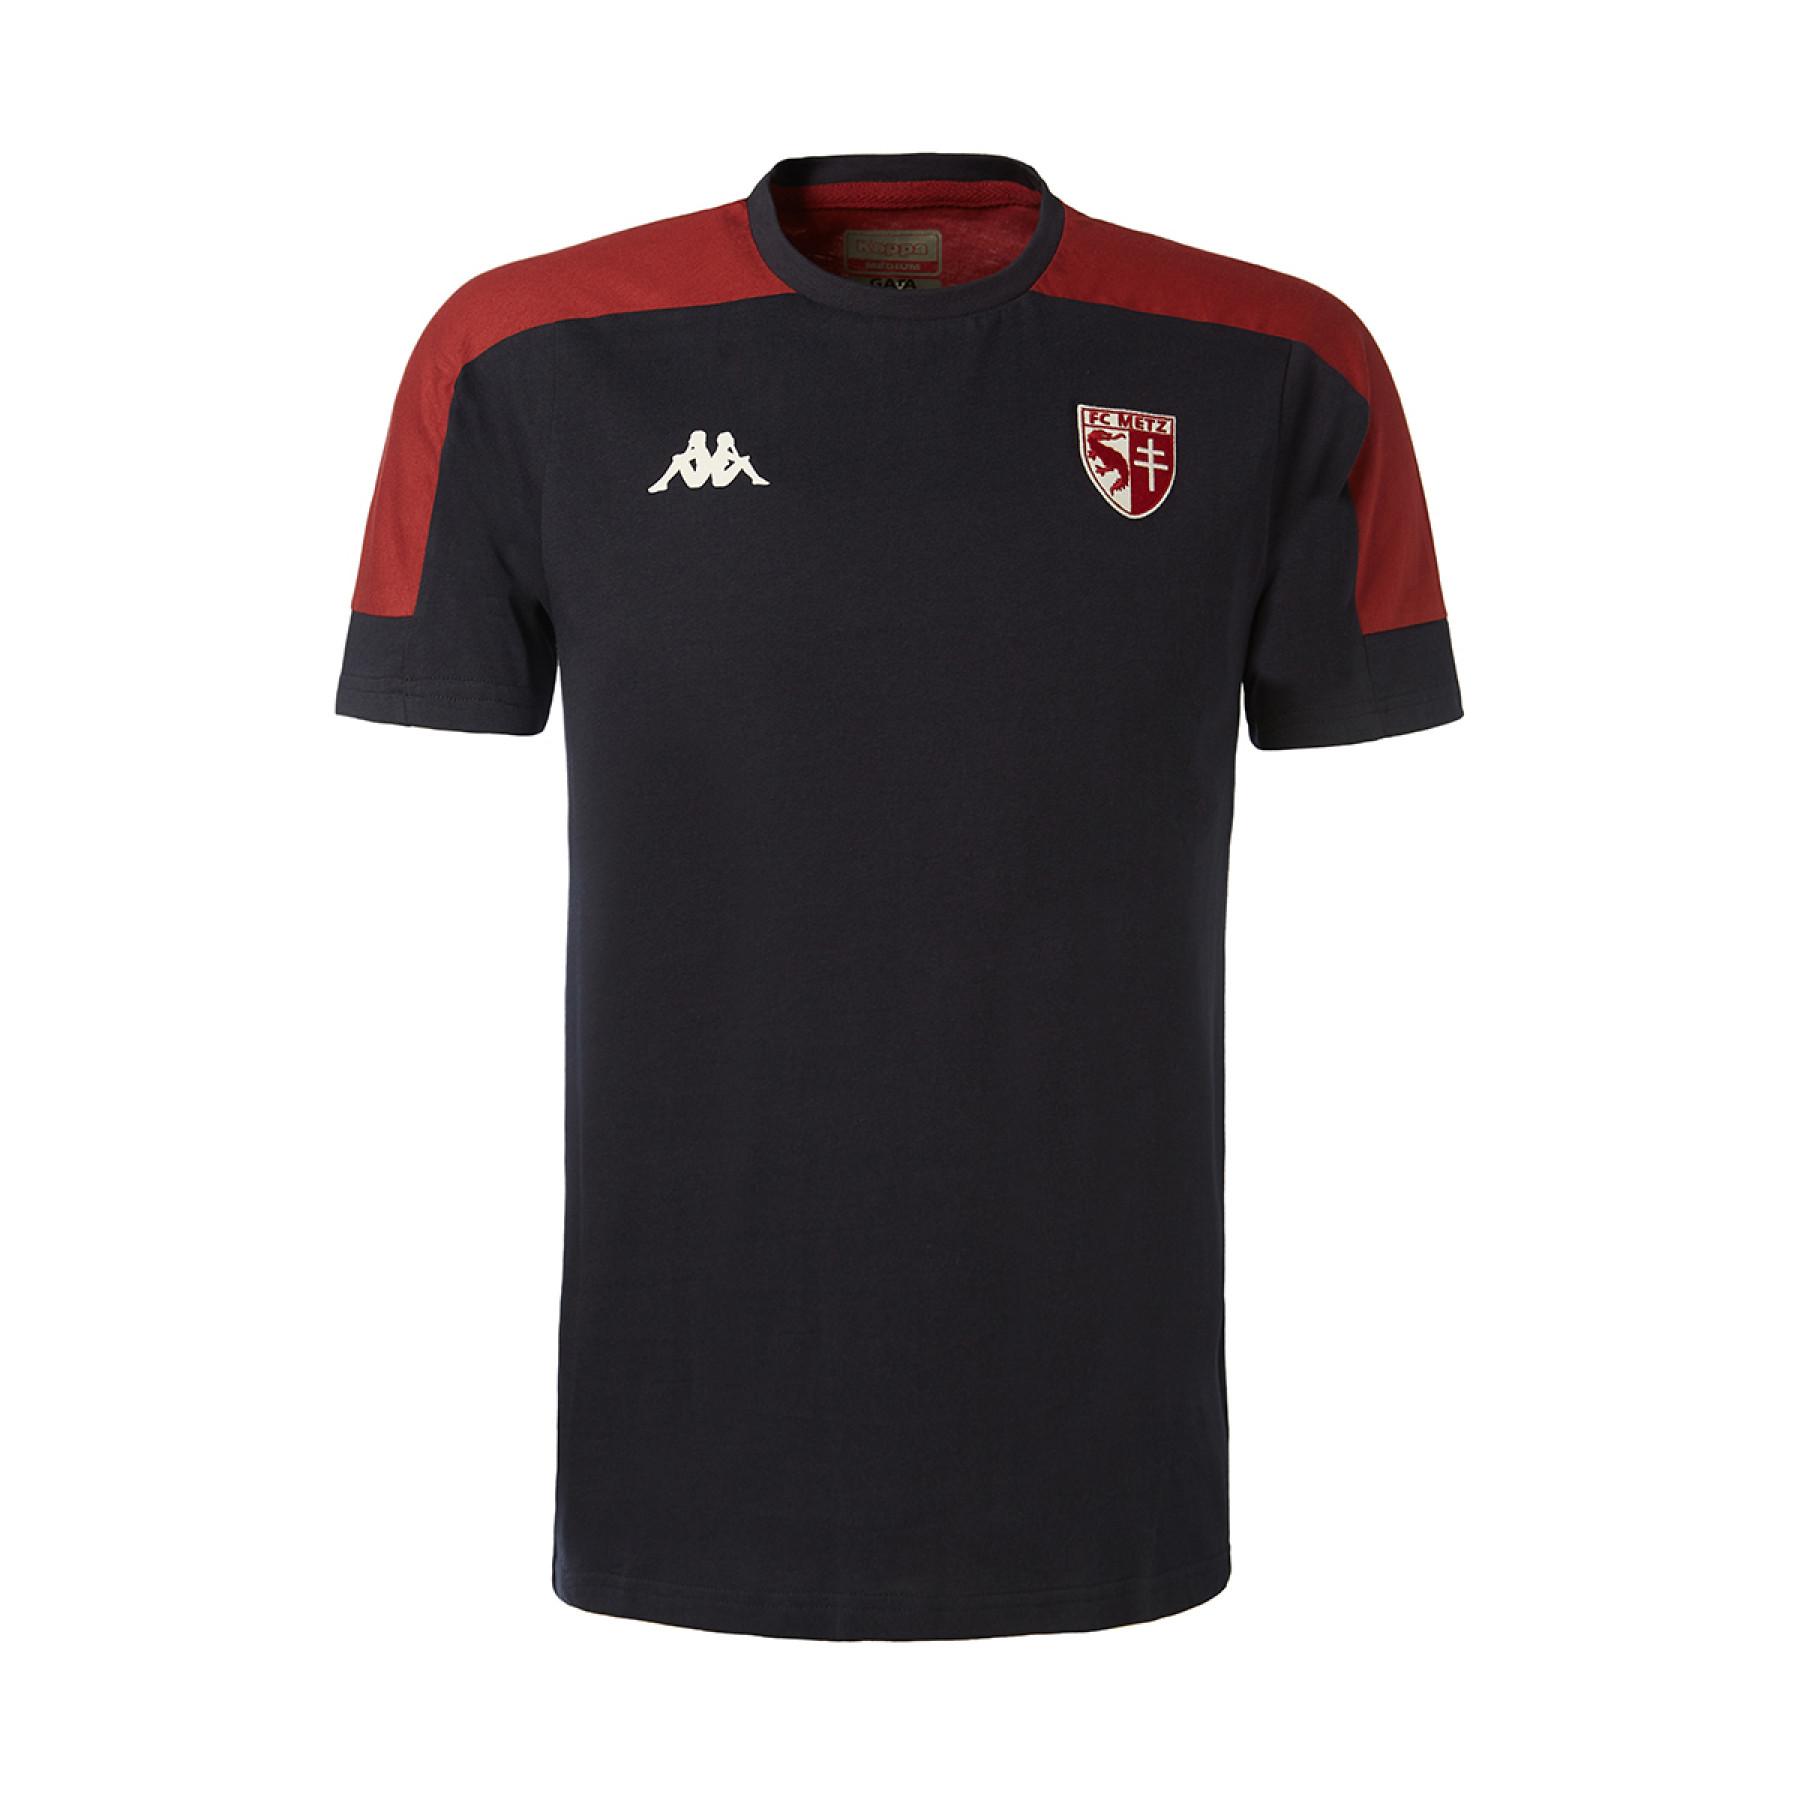 T-shirt enfant FC Metz 2020/21 algardi